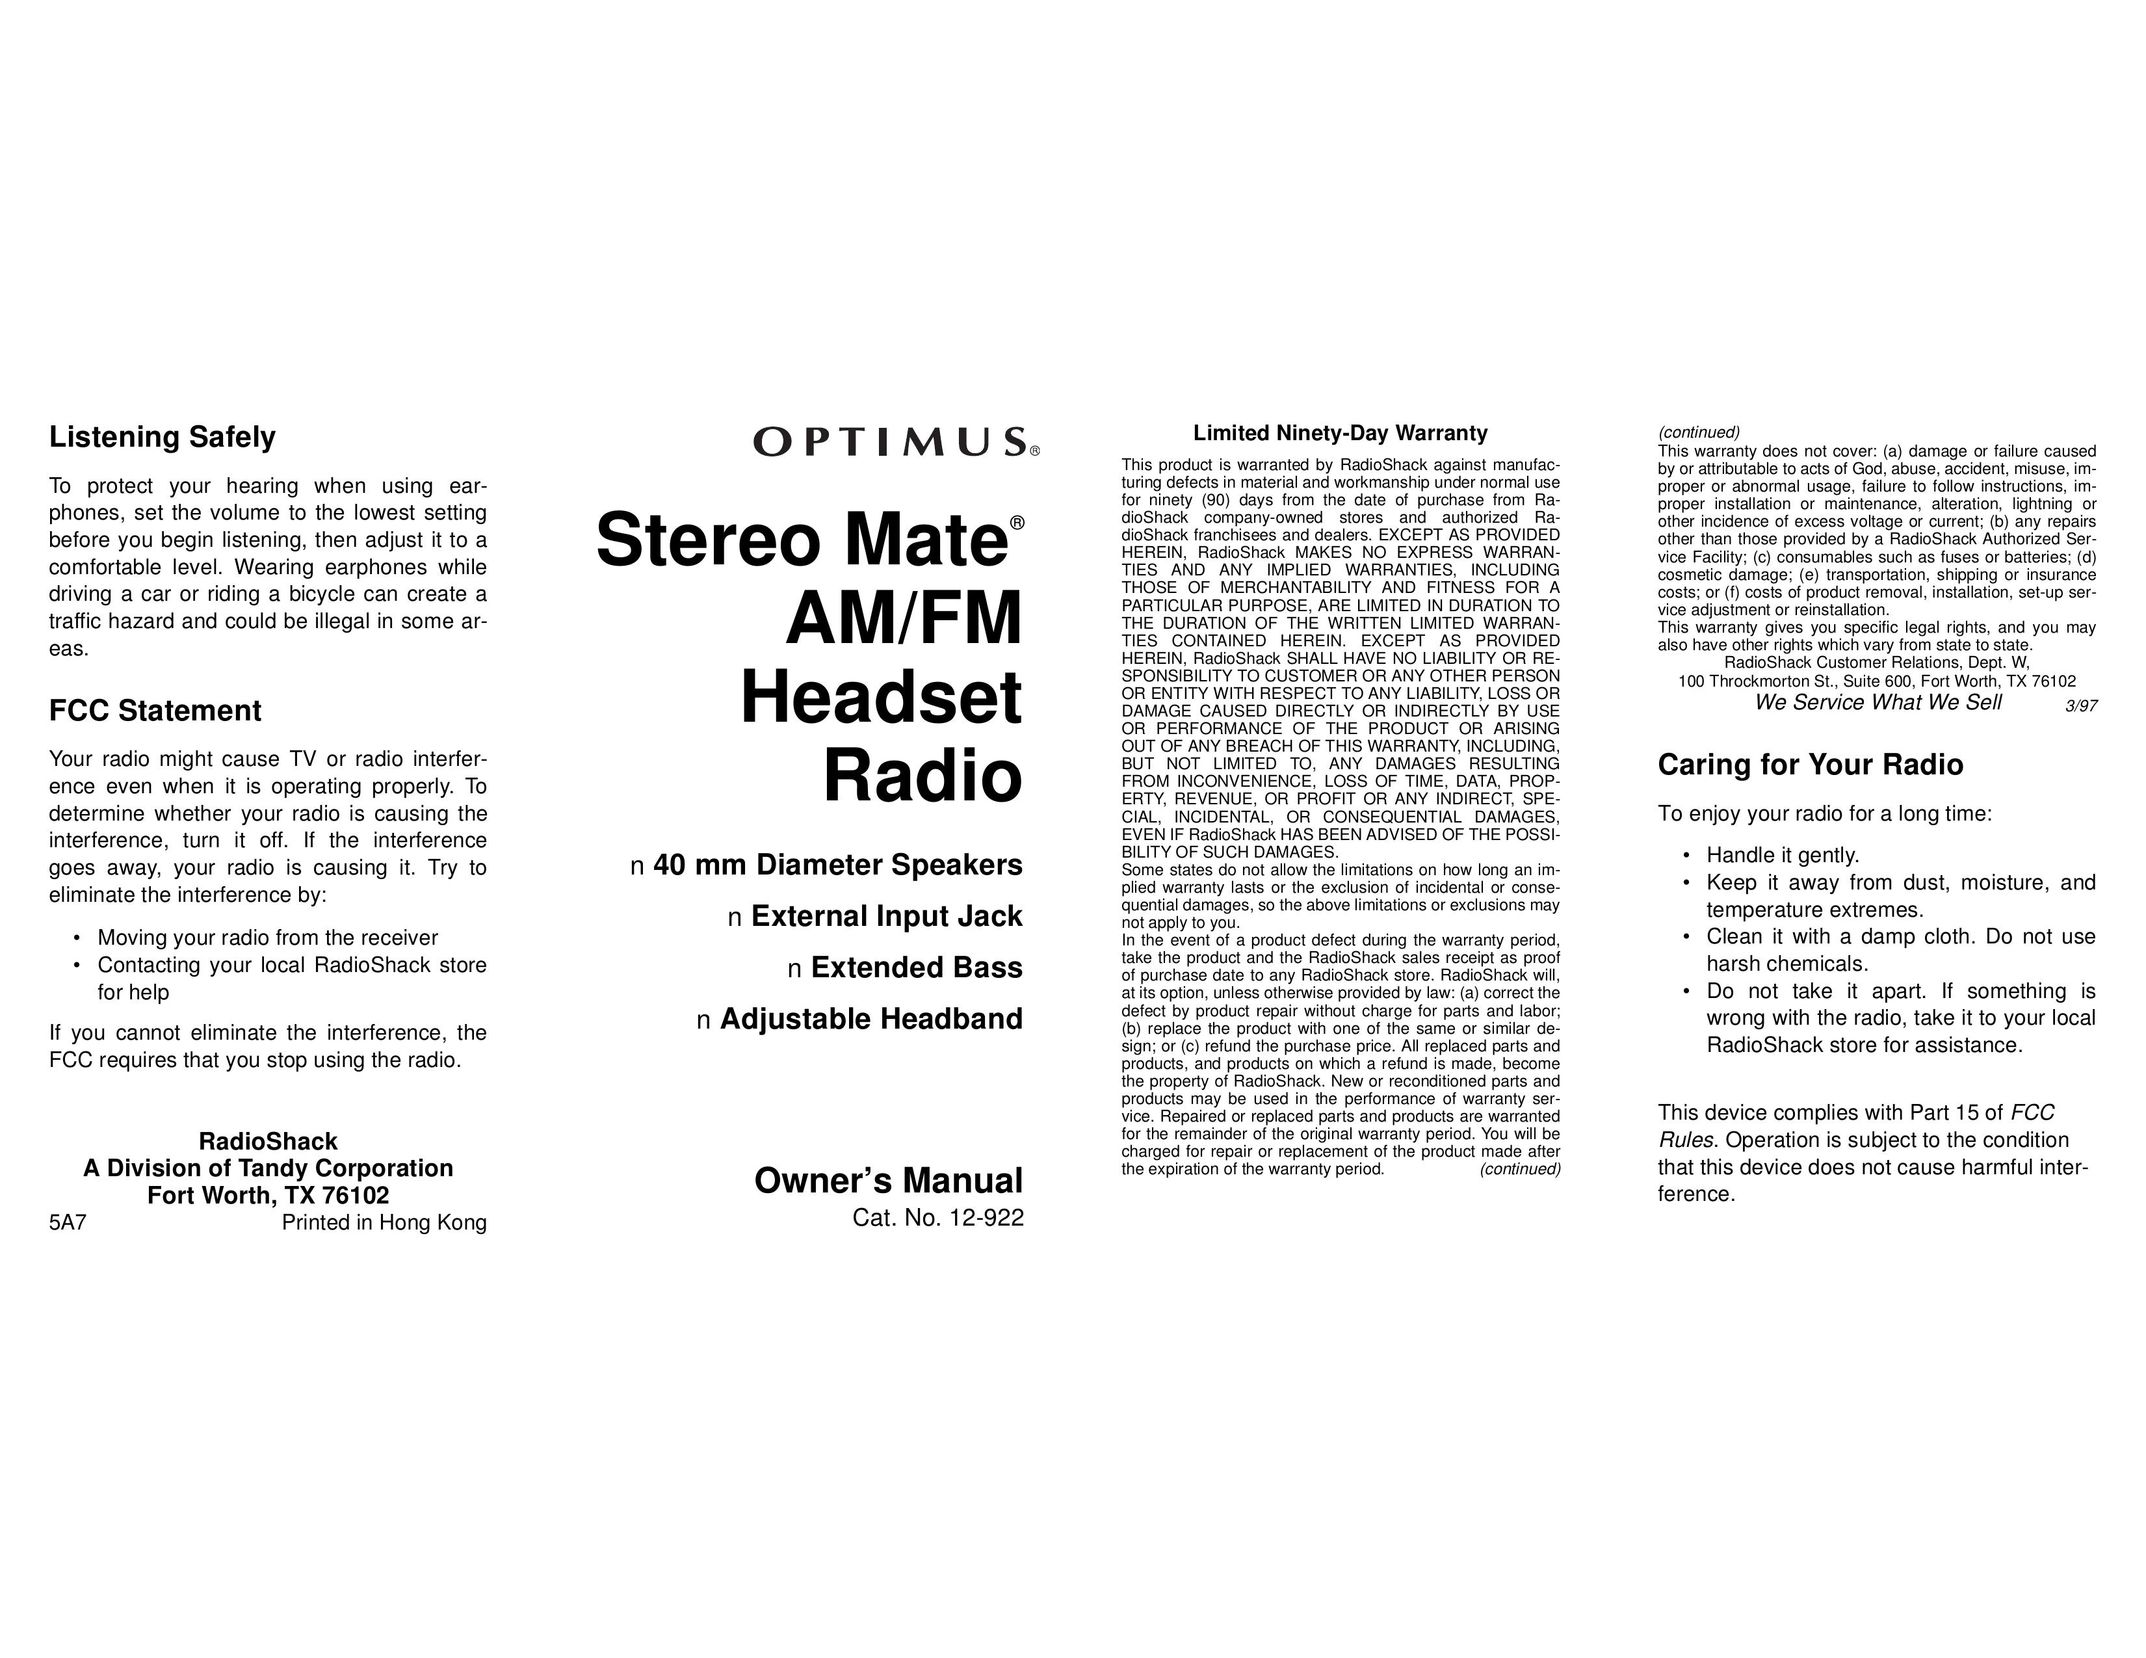 Radio Shack 12-922 Radio User Manual